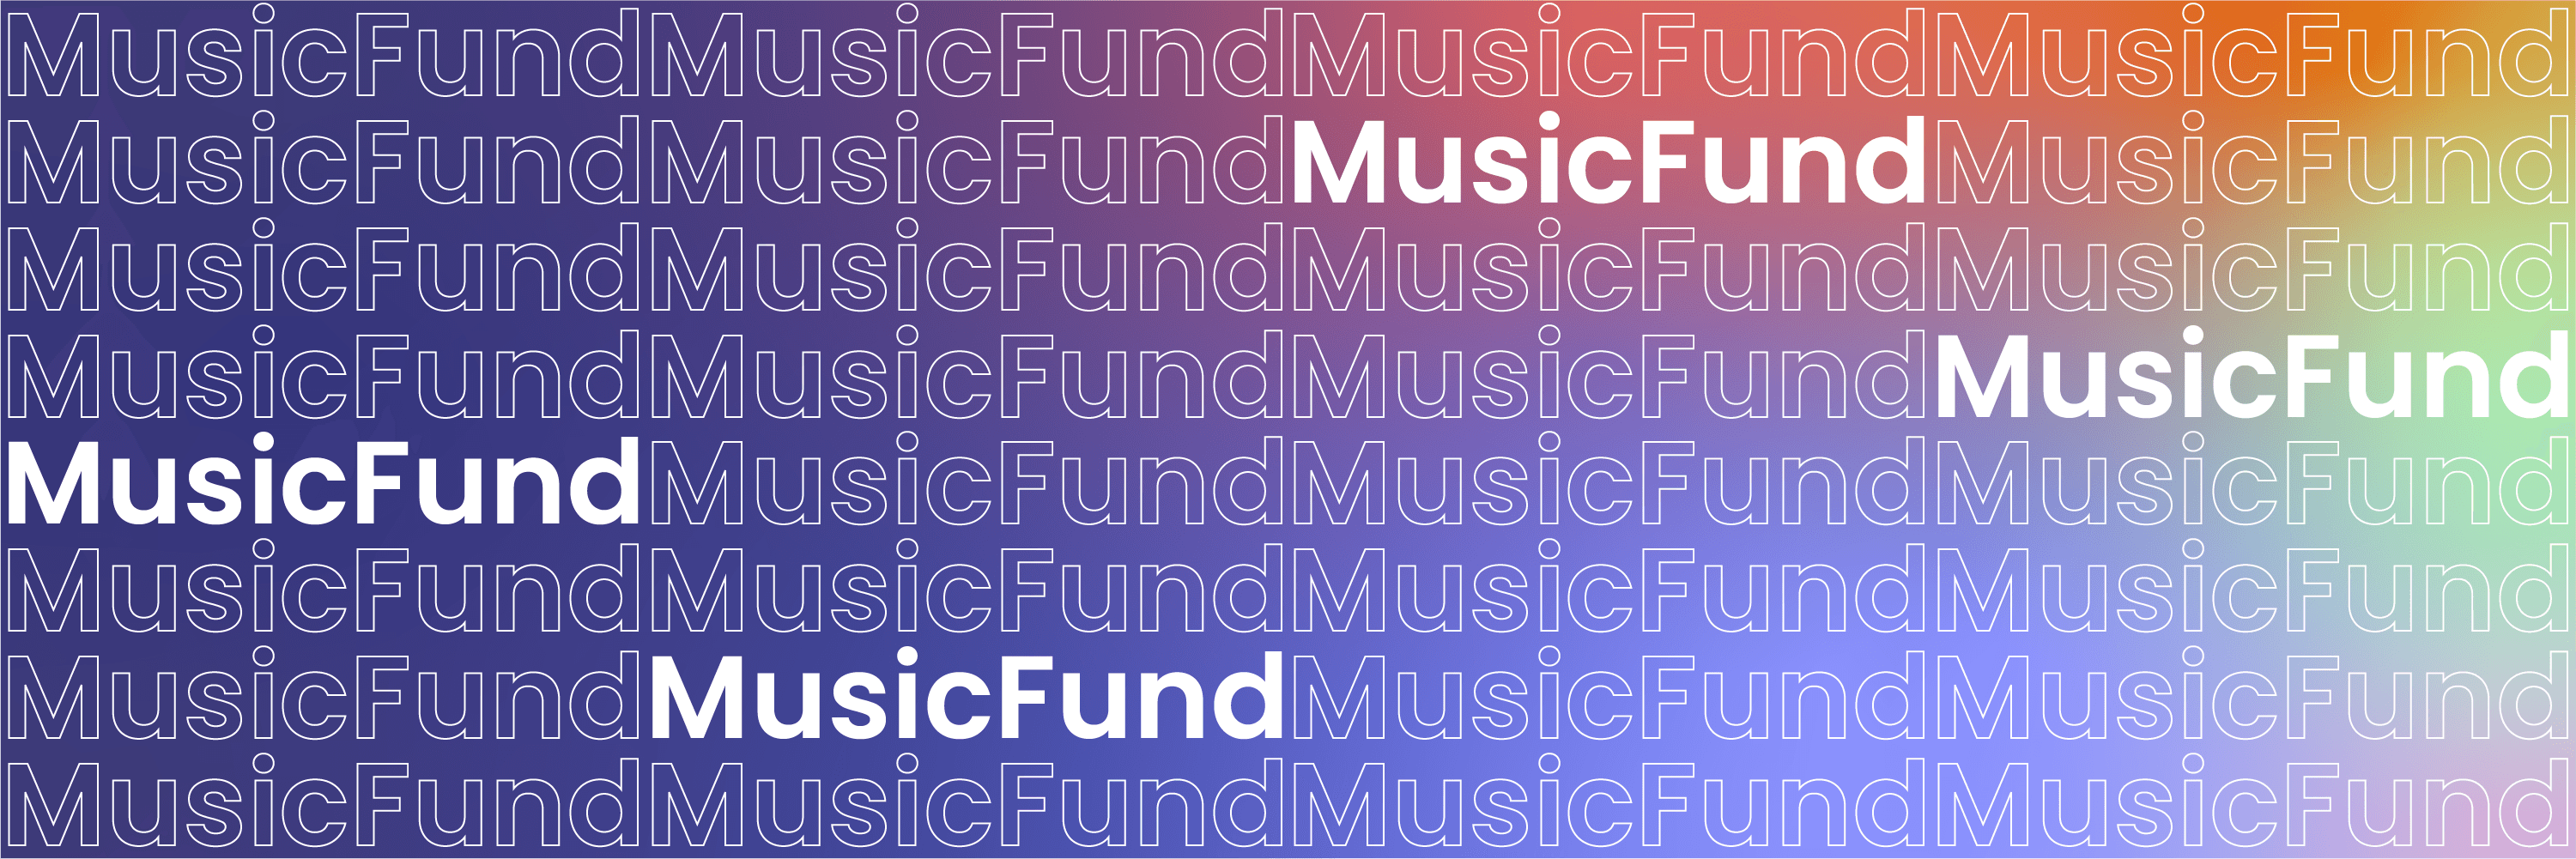 MusicFund bannière